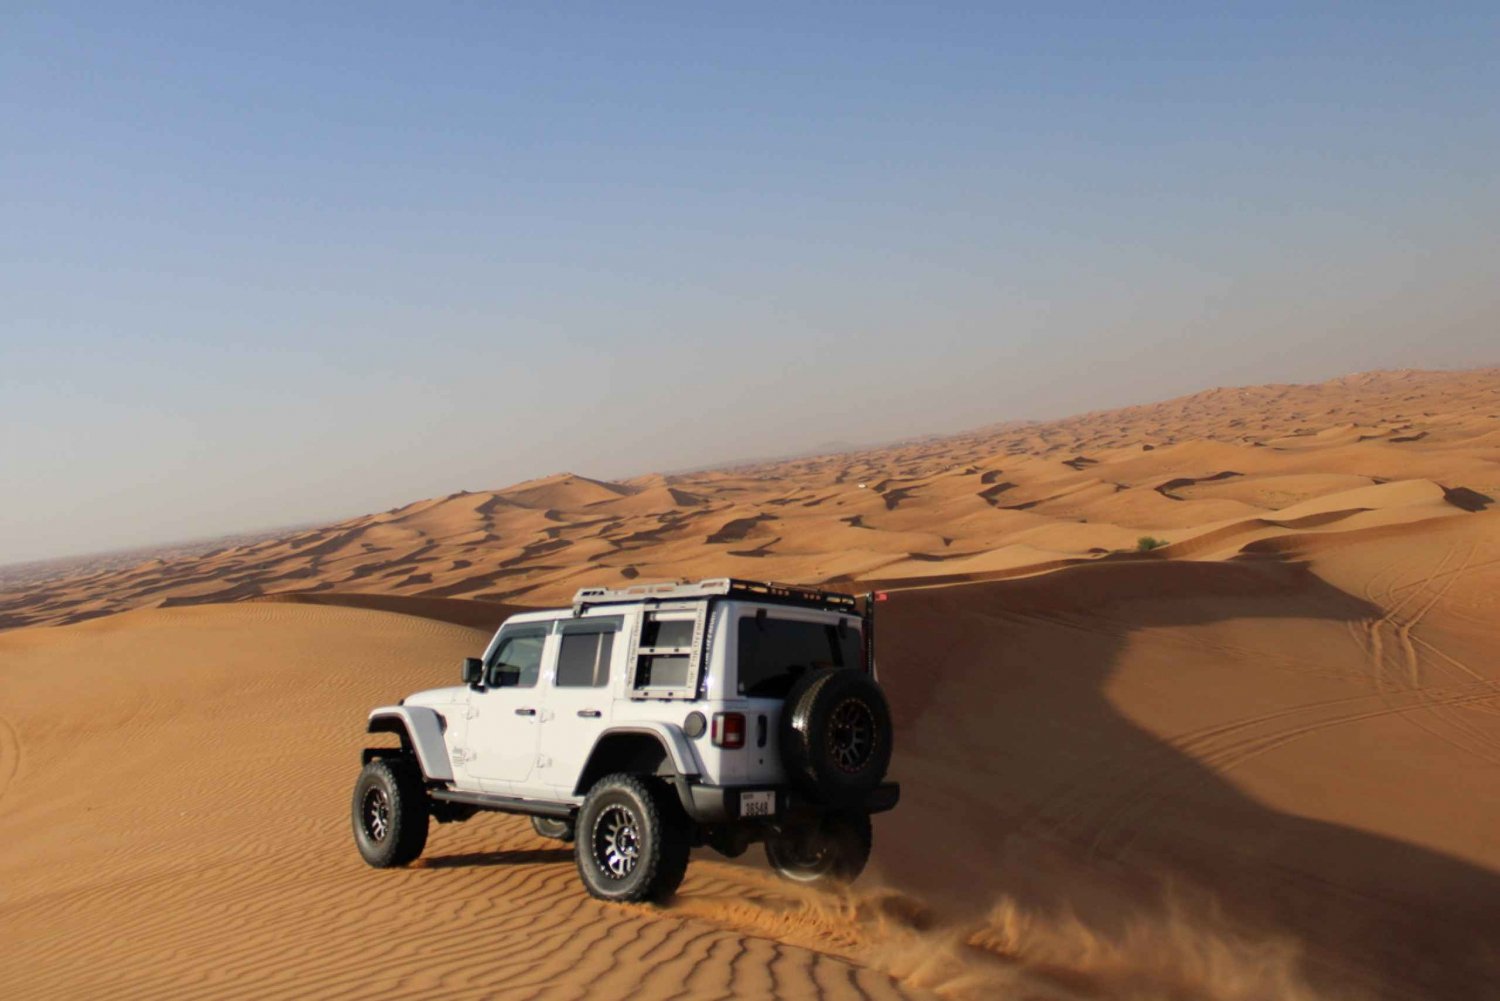 Dubai Jeep Wrangler Sunset Desert Experience e Sandboard